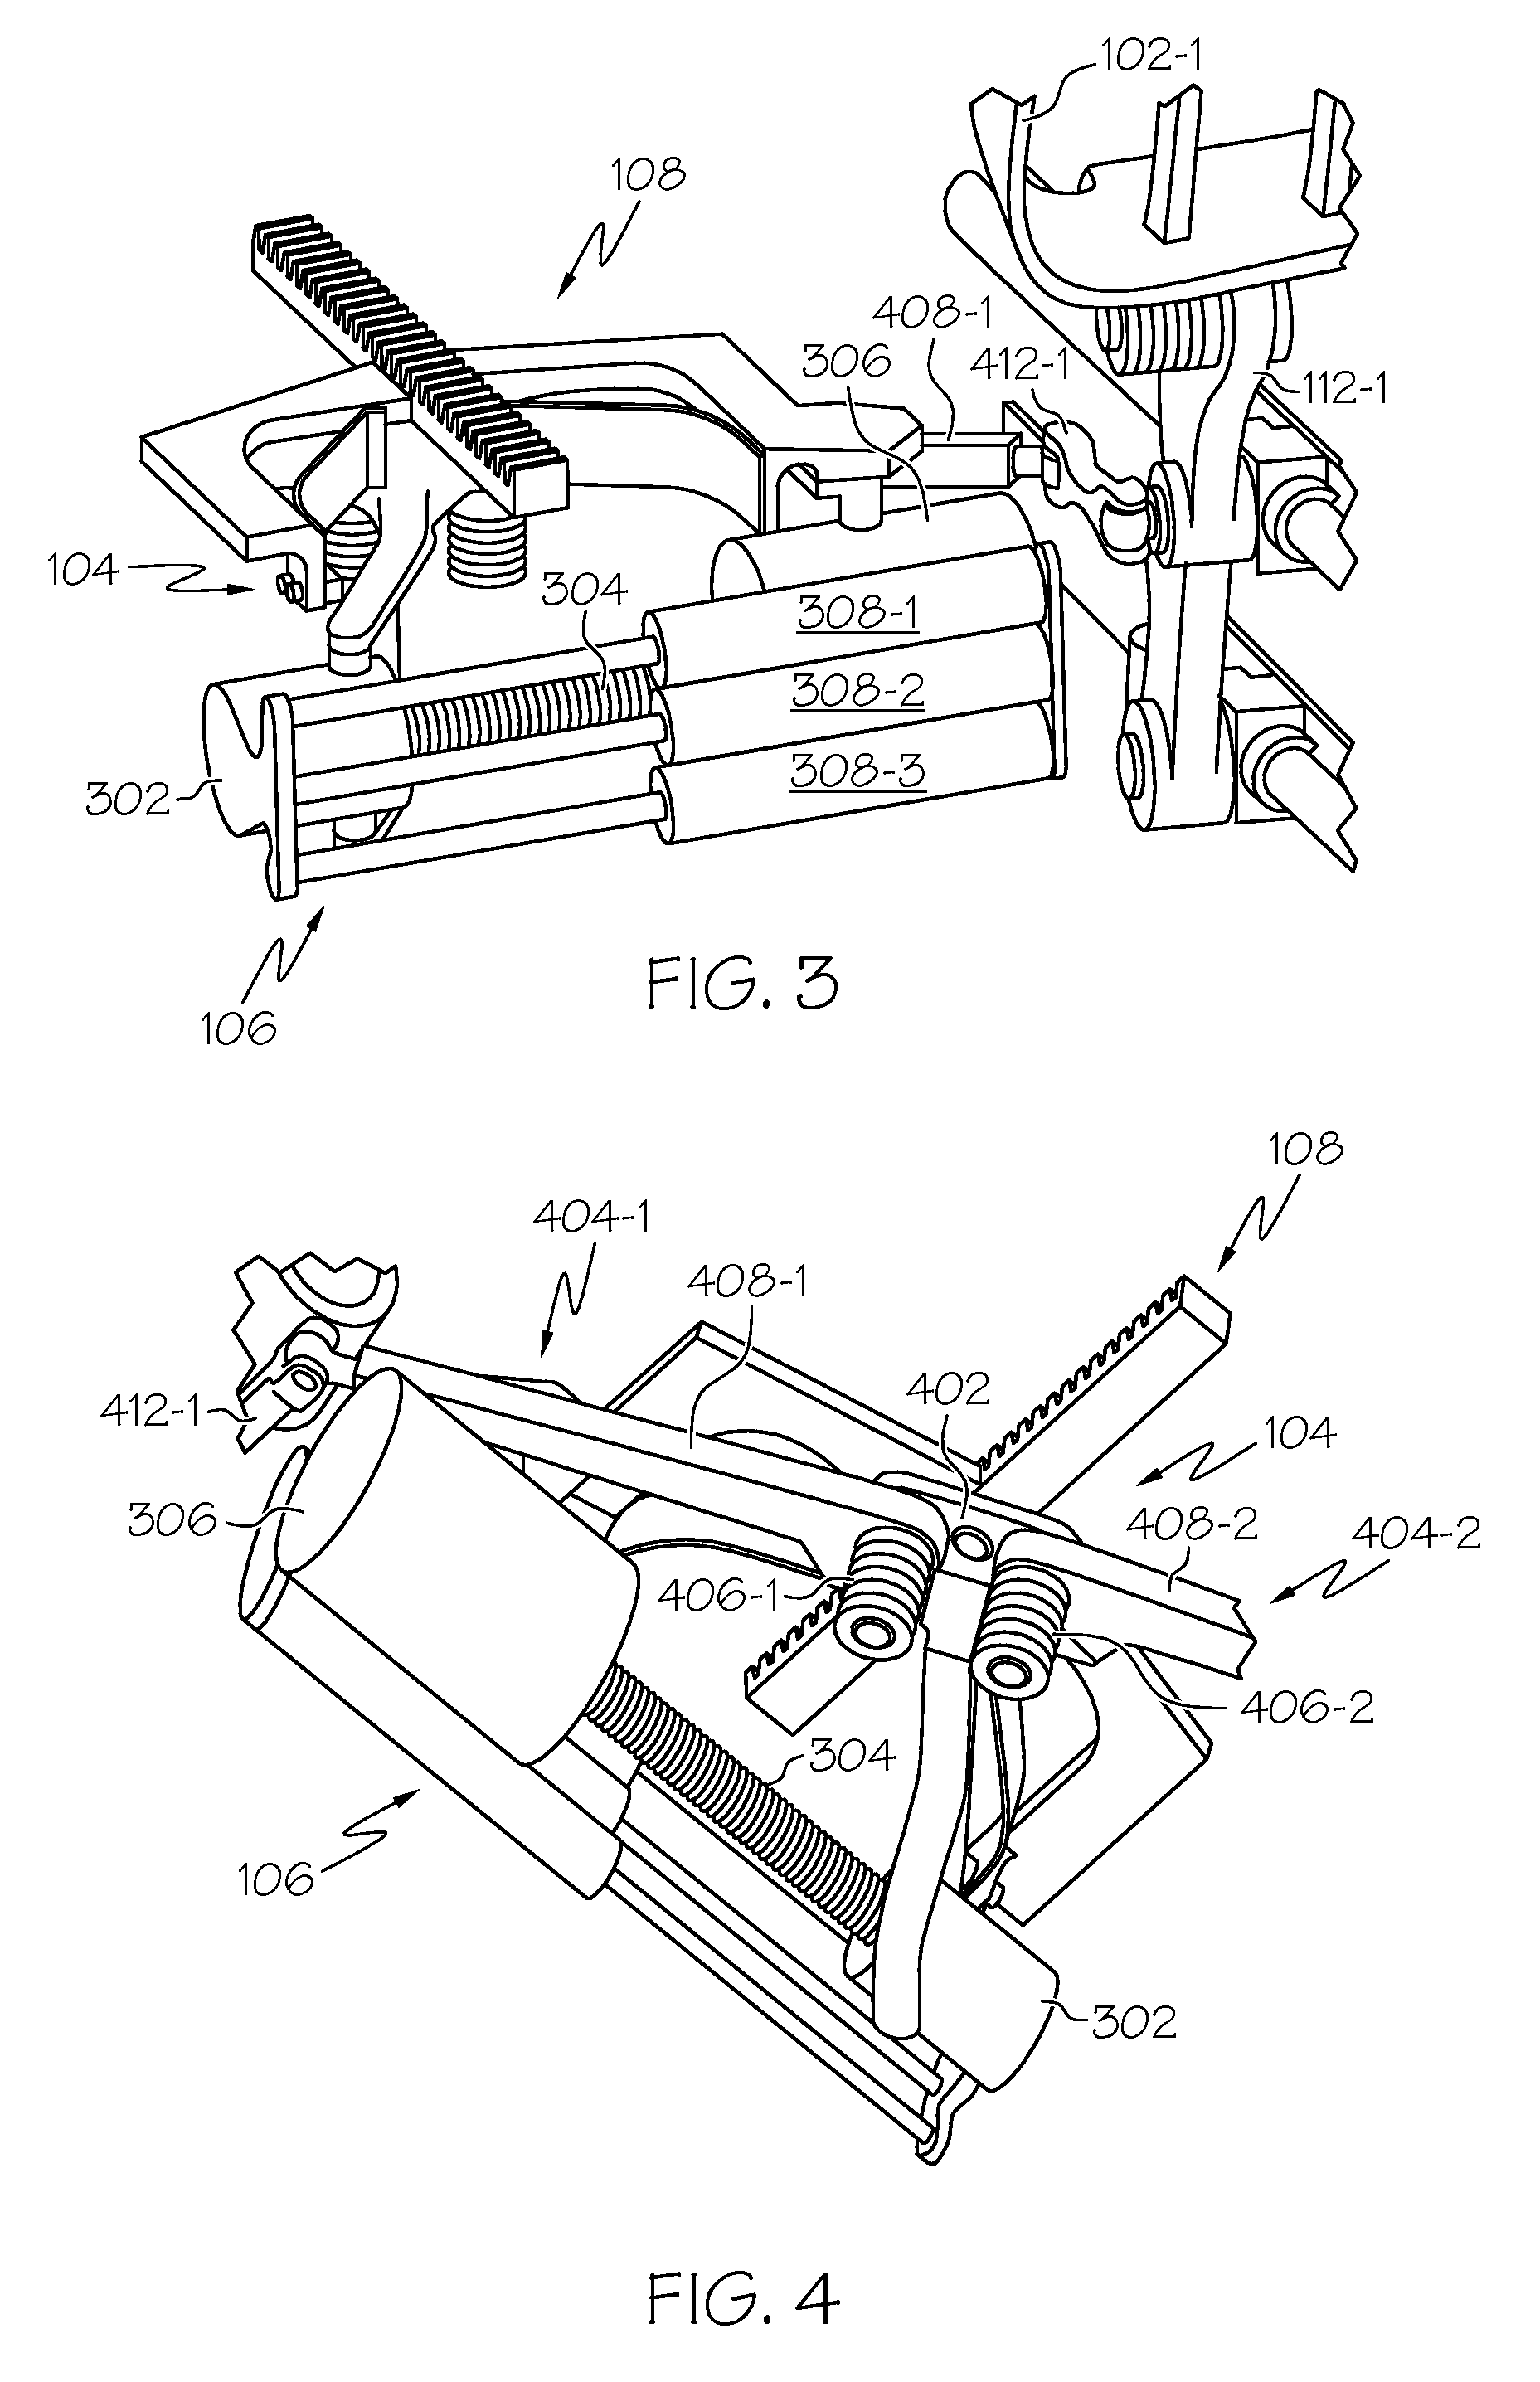 Rudder pedal assembly including non-parallel slide rails